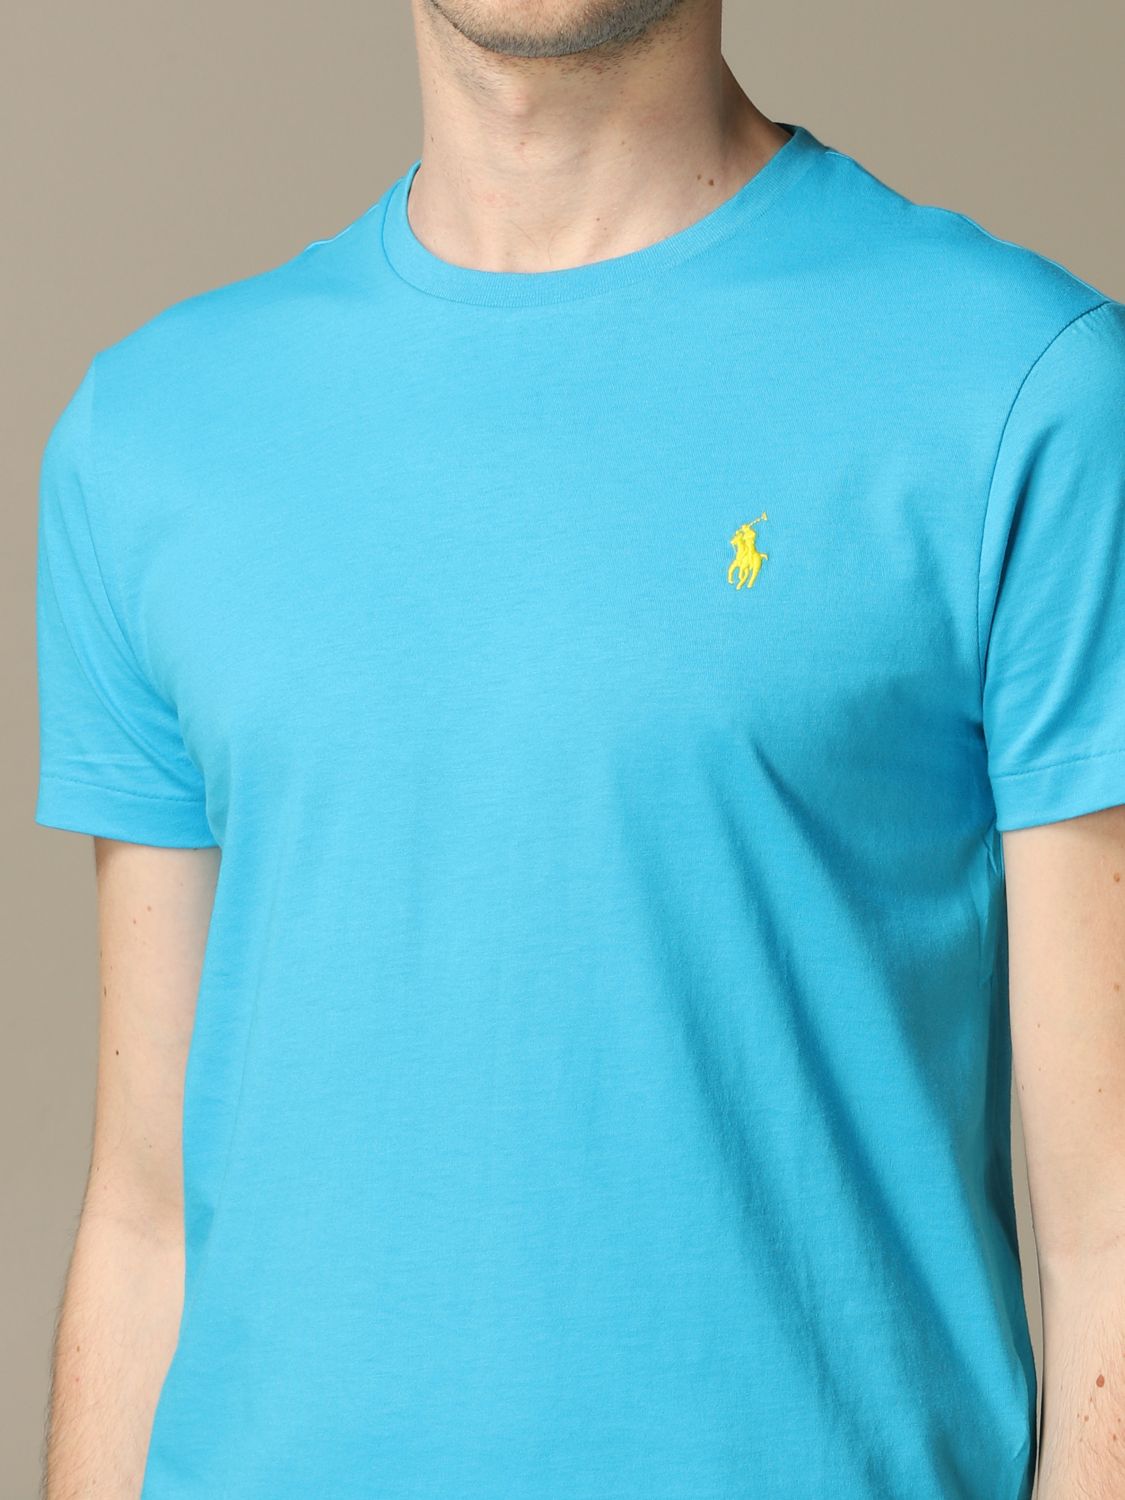 polo ralph lauren turquoise shirt